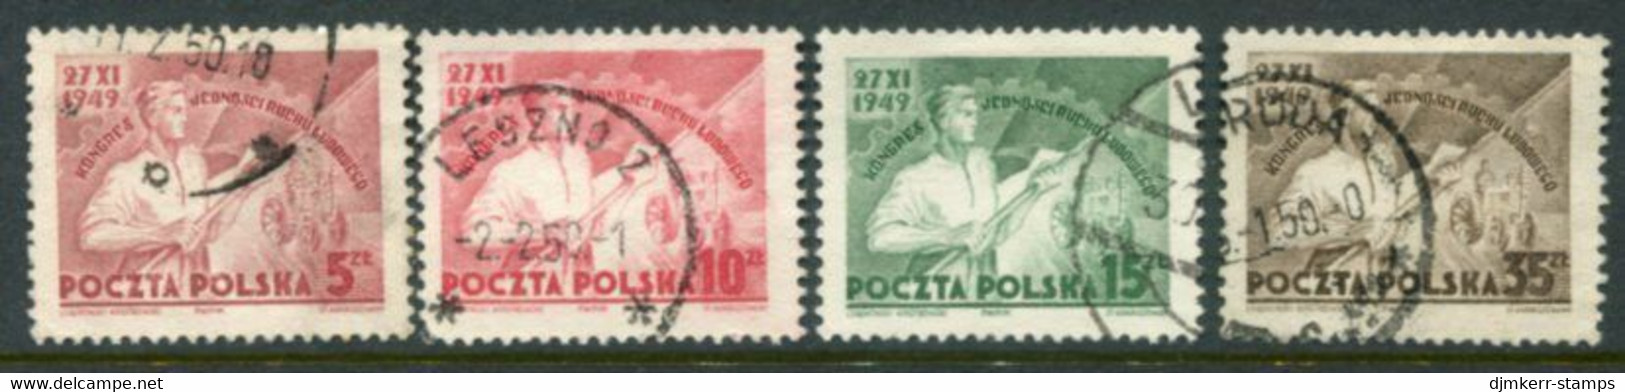 POLAND 1949  Peasant Movement Congress. Used.  Michel 539-42 - Gebruikt